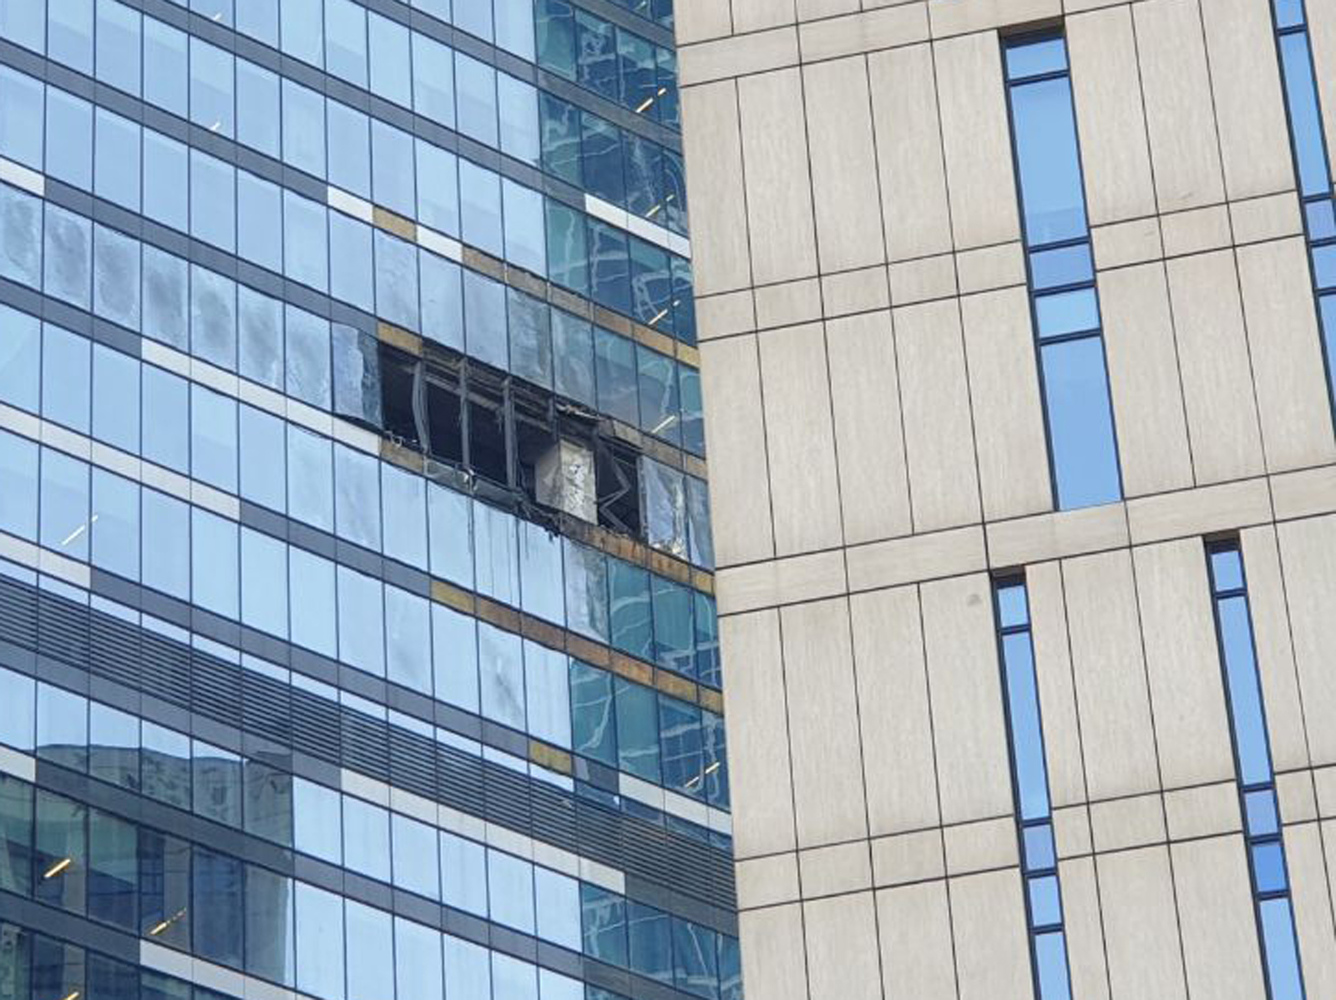 Дрон повредил здание Москва-сити: кадры последствий атаки